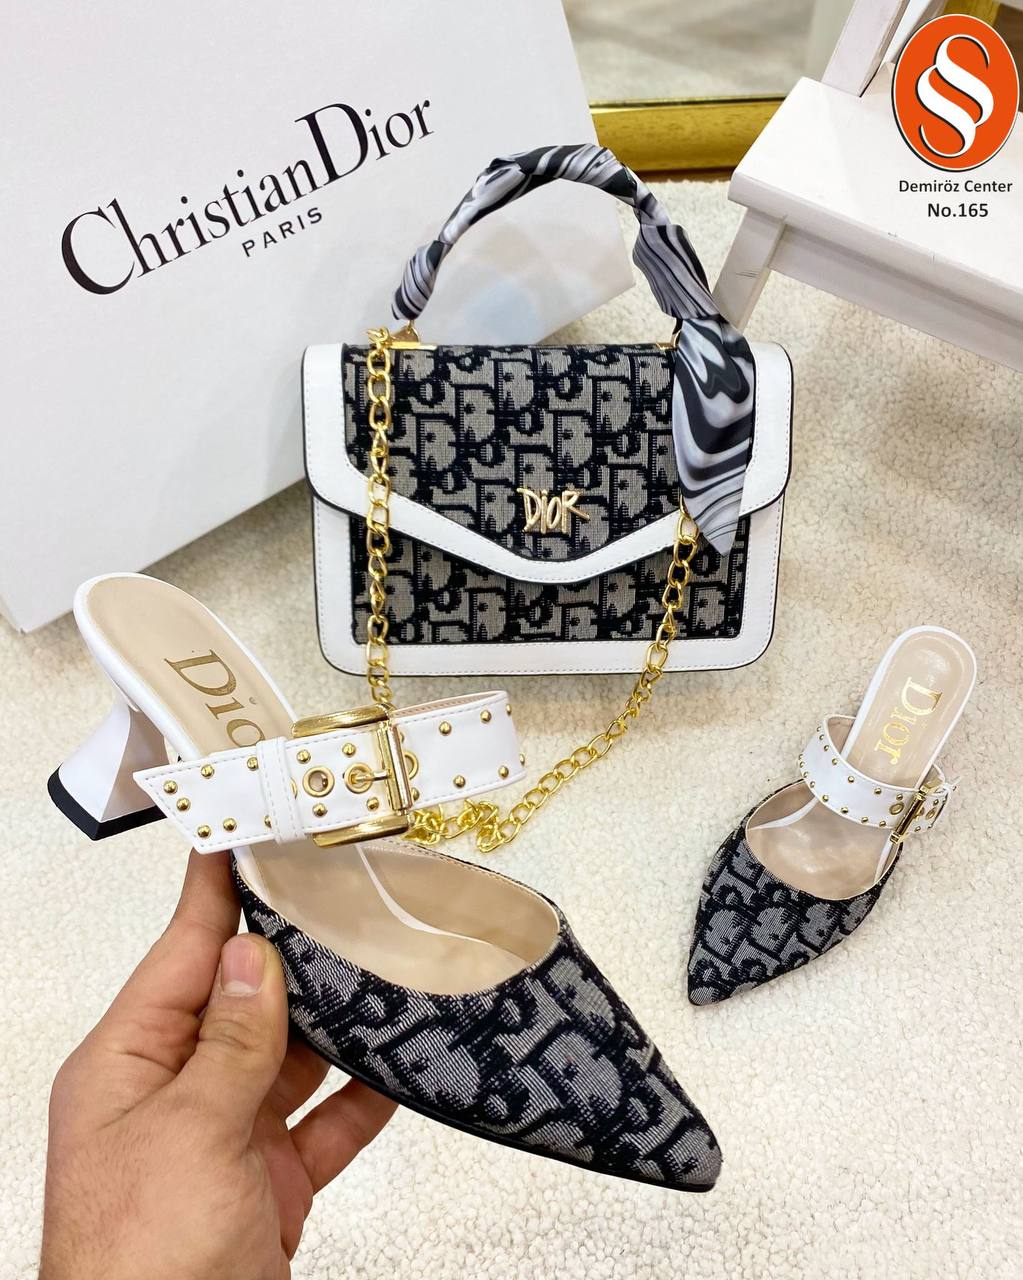 Christian dior heels and handbag